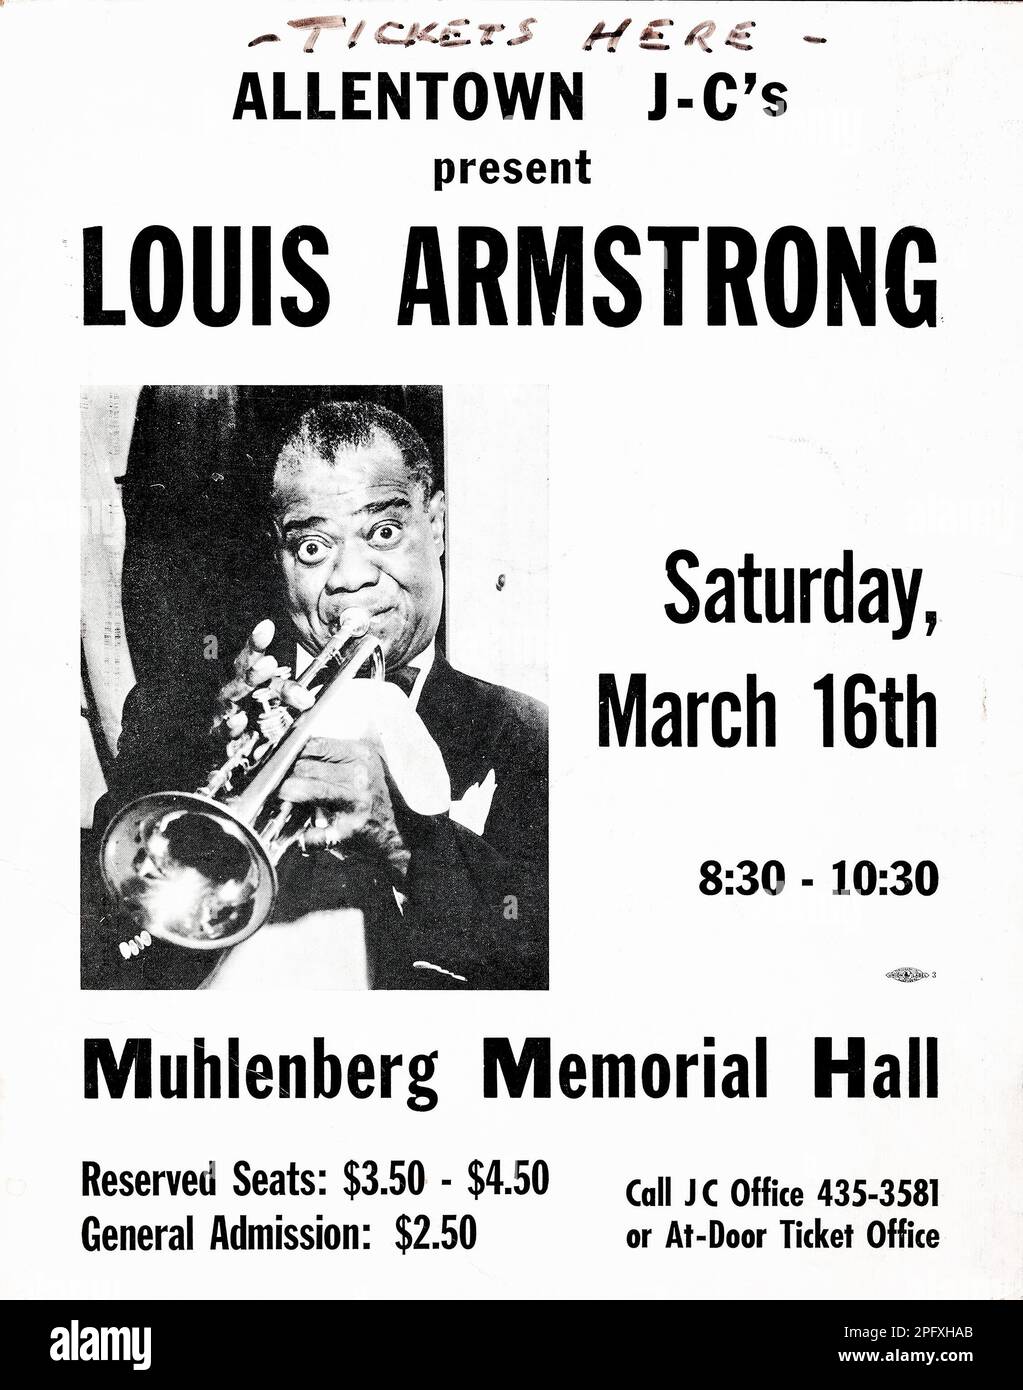 Louis Armstrong - Satchmo - presso la Muhlenberg Memorial Hall (Allentown J-C's, 1956) scheda vetrina Foto Stock